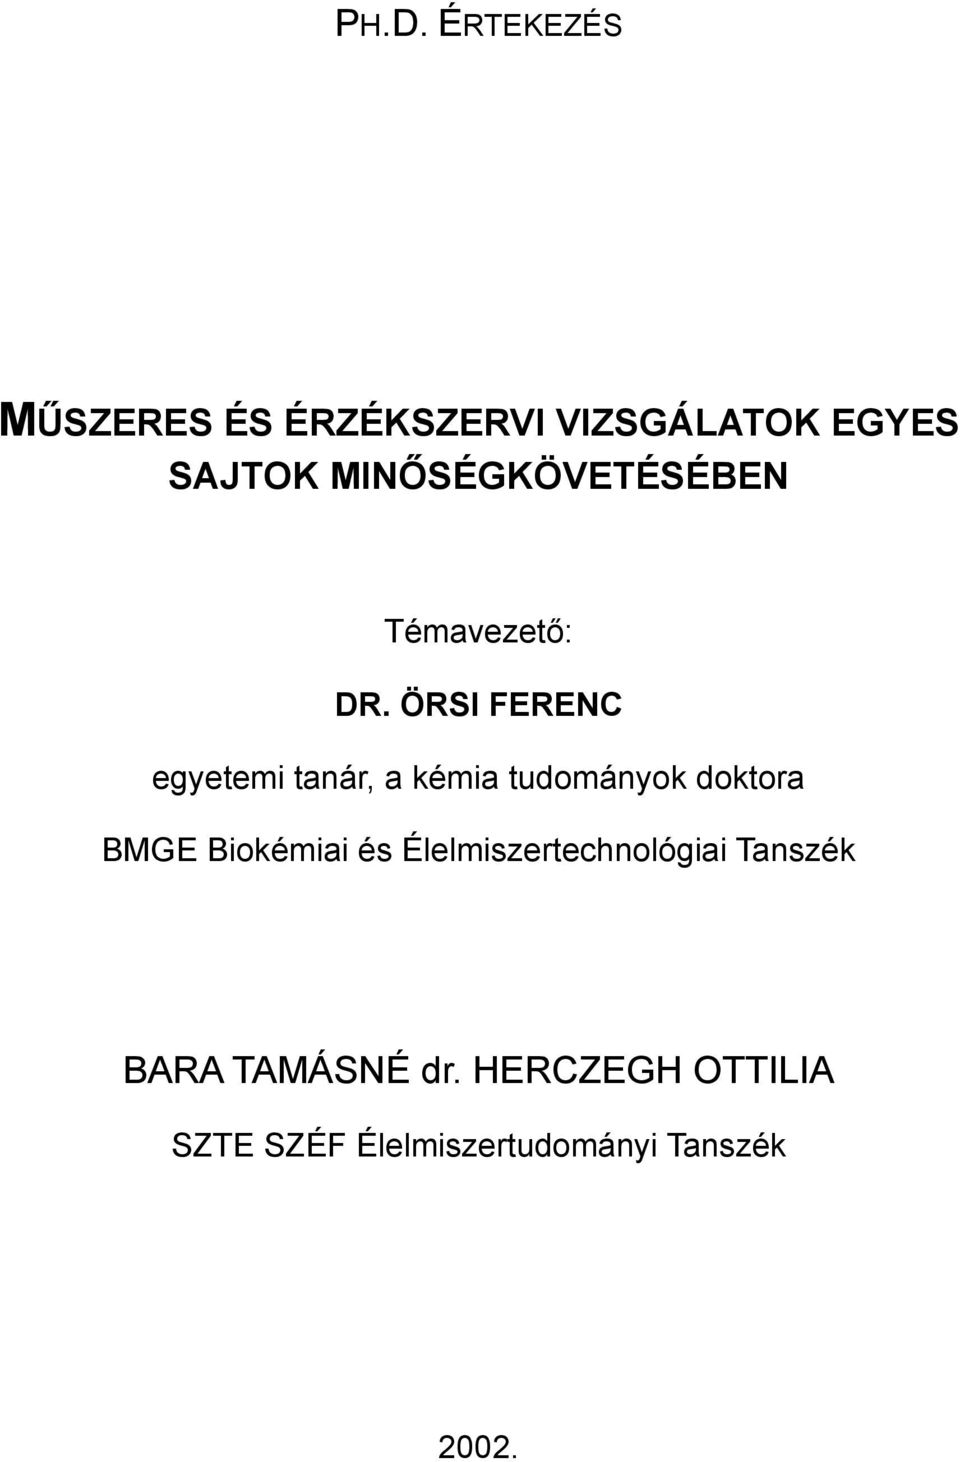 ÖRSI FERENC egyetemi tanár, a kémia tudományok doktora BMGE Biokémiai